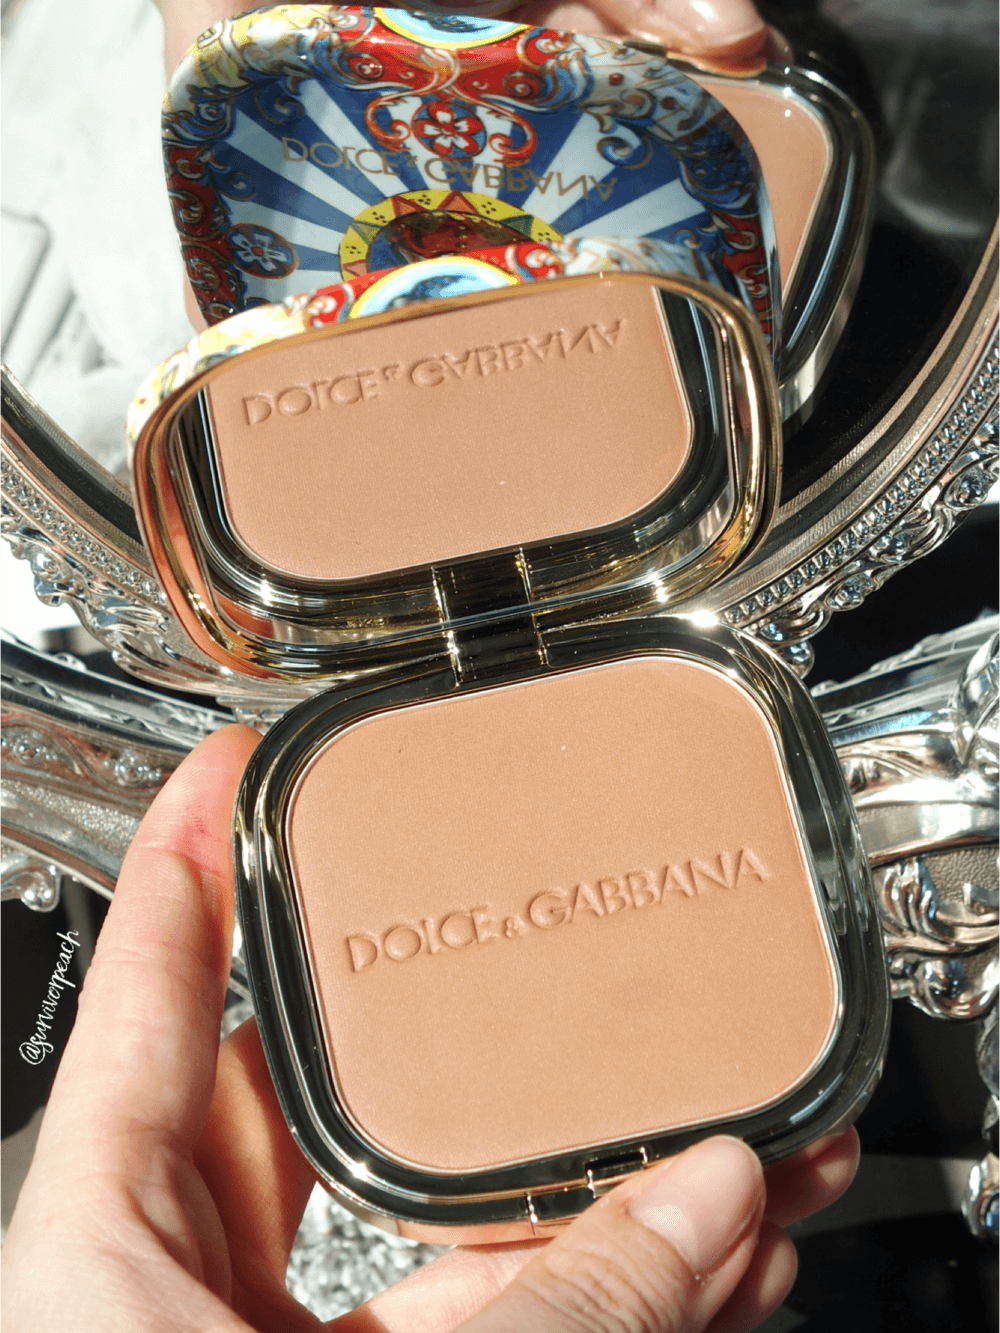 Dolce & Gabbana Solar Glow Ultra-Light Bronzing Powder #30 Sunrise 2 g บลอนซิ่ง พาวเดอร์ที่ให้ผิวดูเปล่งปลั่งเงางาม อณูแป้งเนื้อละเอียด ให้ผิวดูเปล่งประกายเสมือนอาบแดดมาในทันที